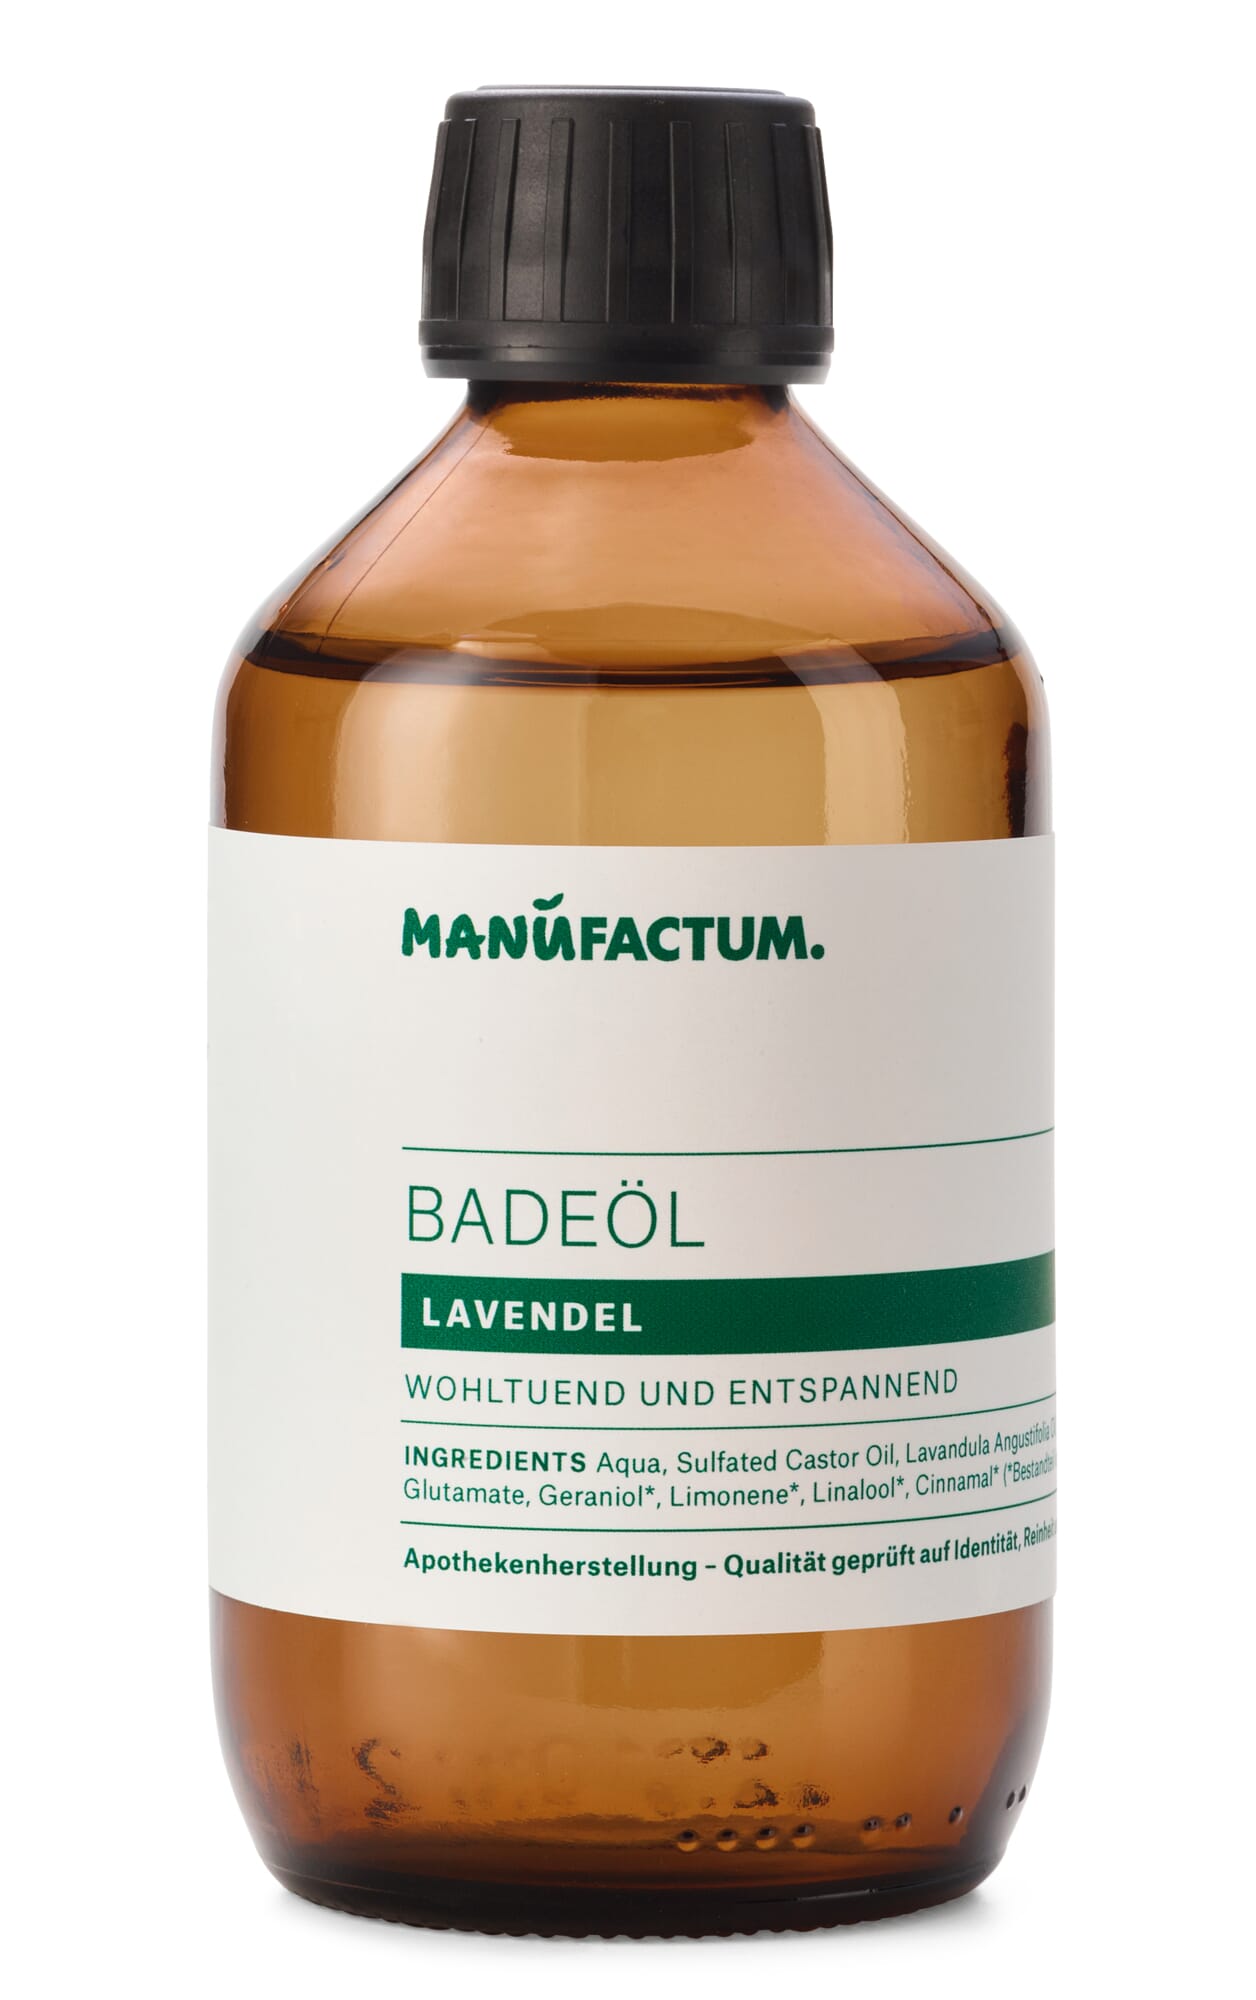 met de klok mee methodologie Soeverein Manufactum Badolie, Lavendel | Manufactum